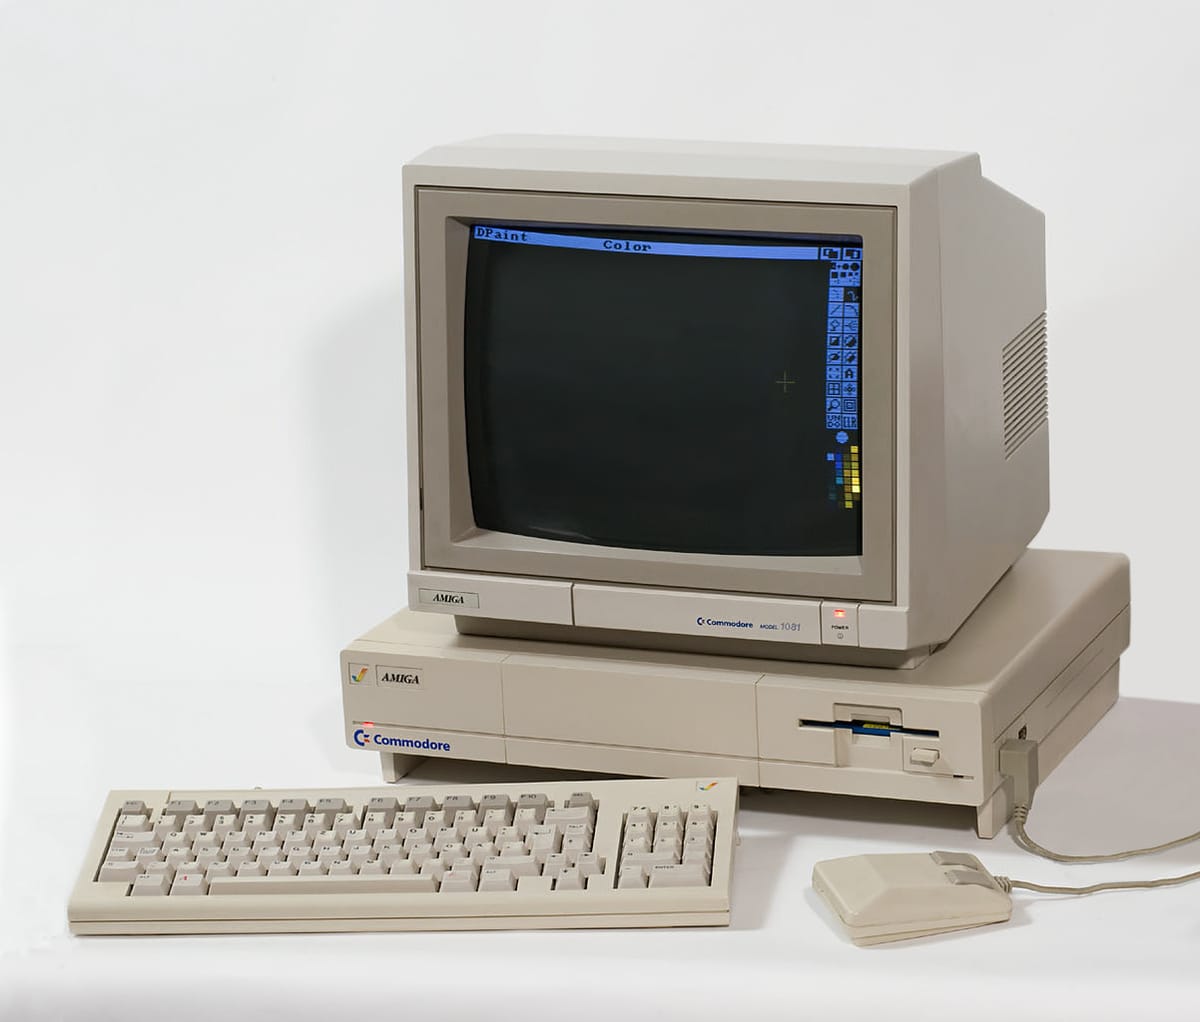 Amiga 1000 (Original photo by Kaiiv (de.wikipedia))